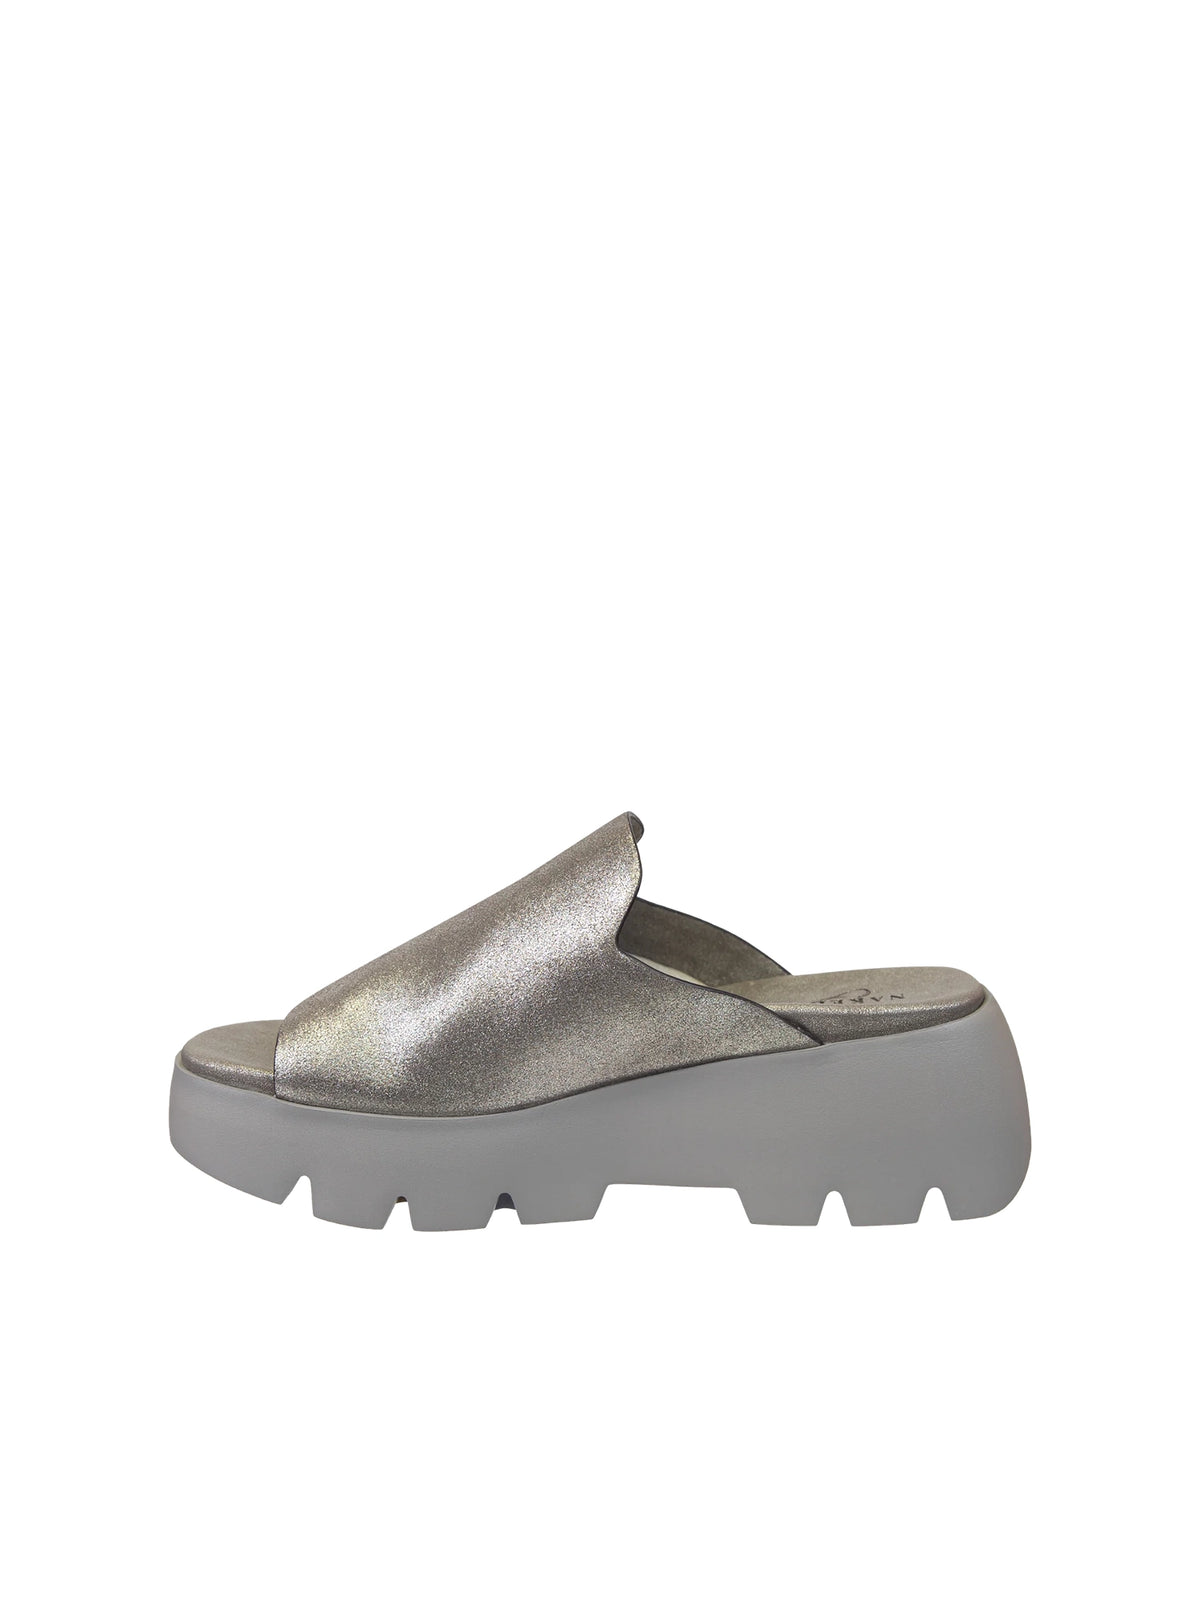 naked feet drift platform sandal in silver-side view 2